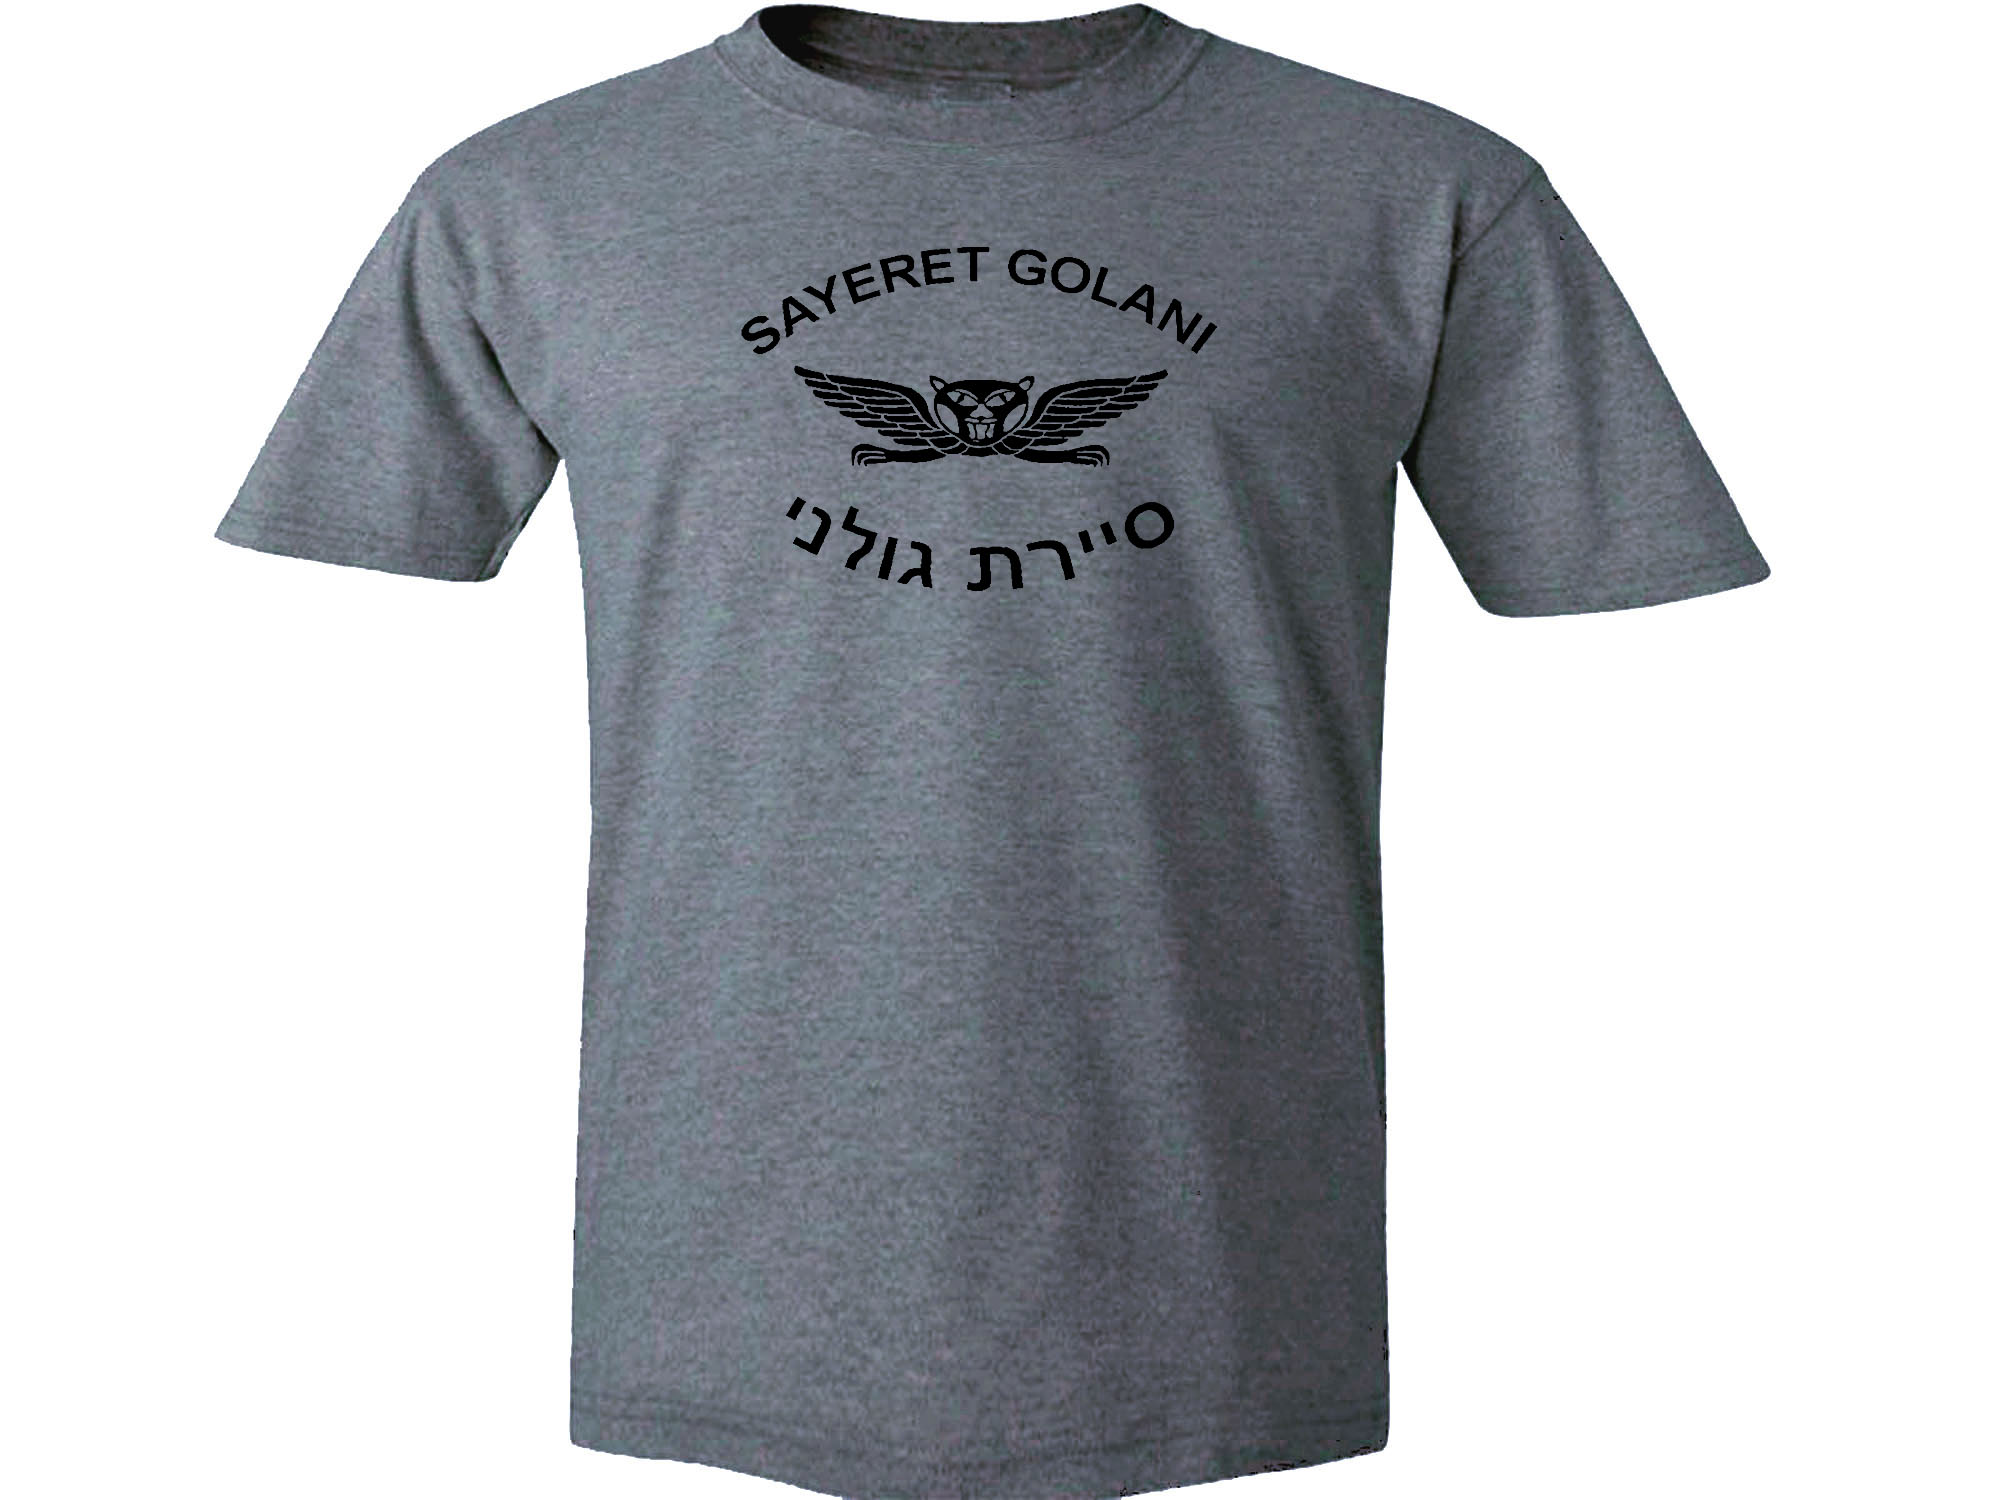 Sayeret Golani IDF Israeli army special unit t-shirt 2